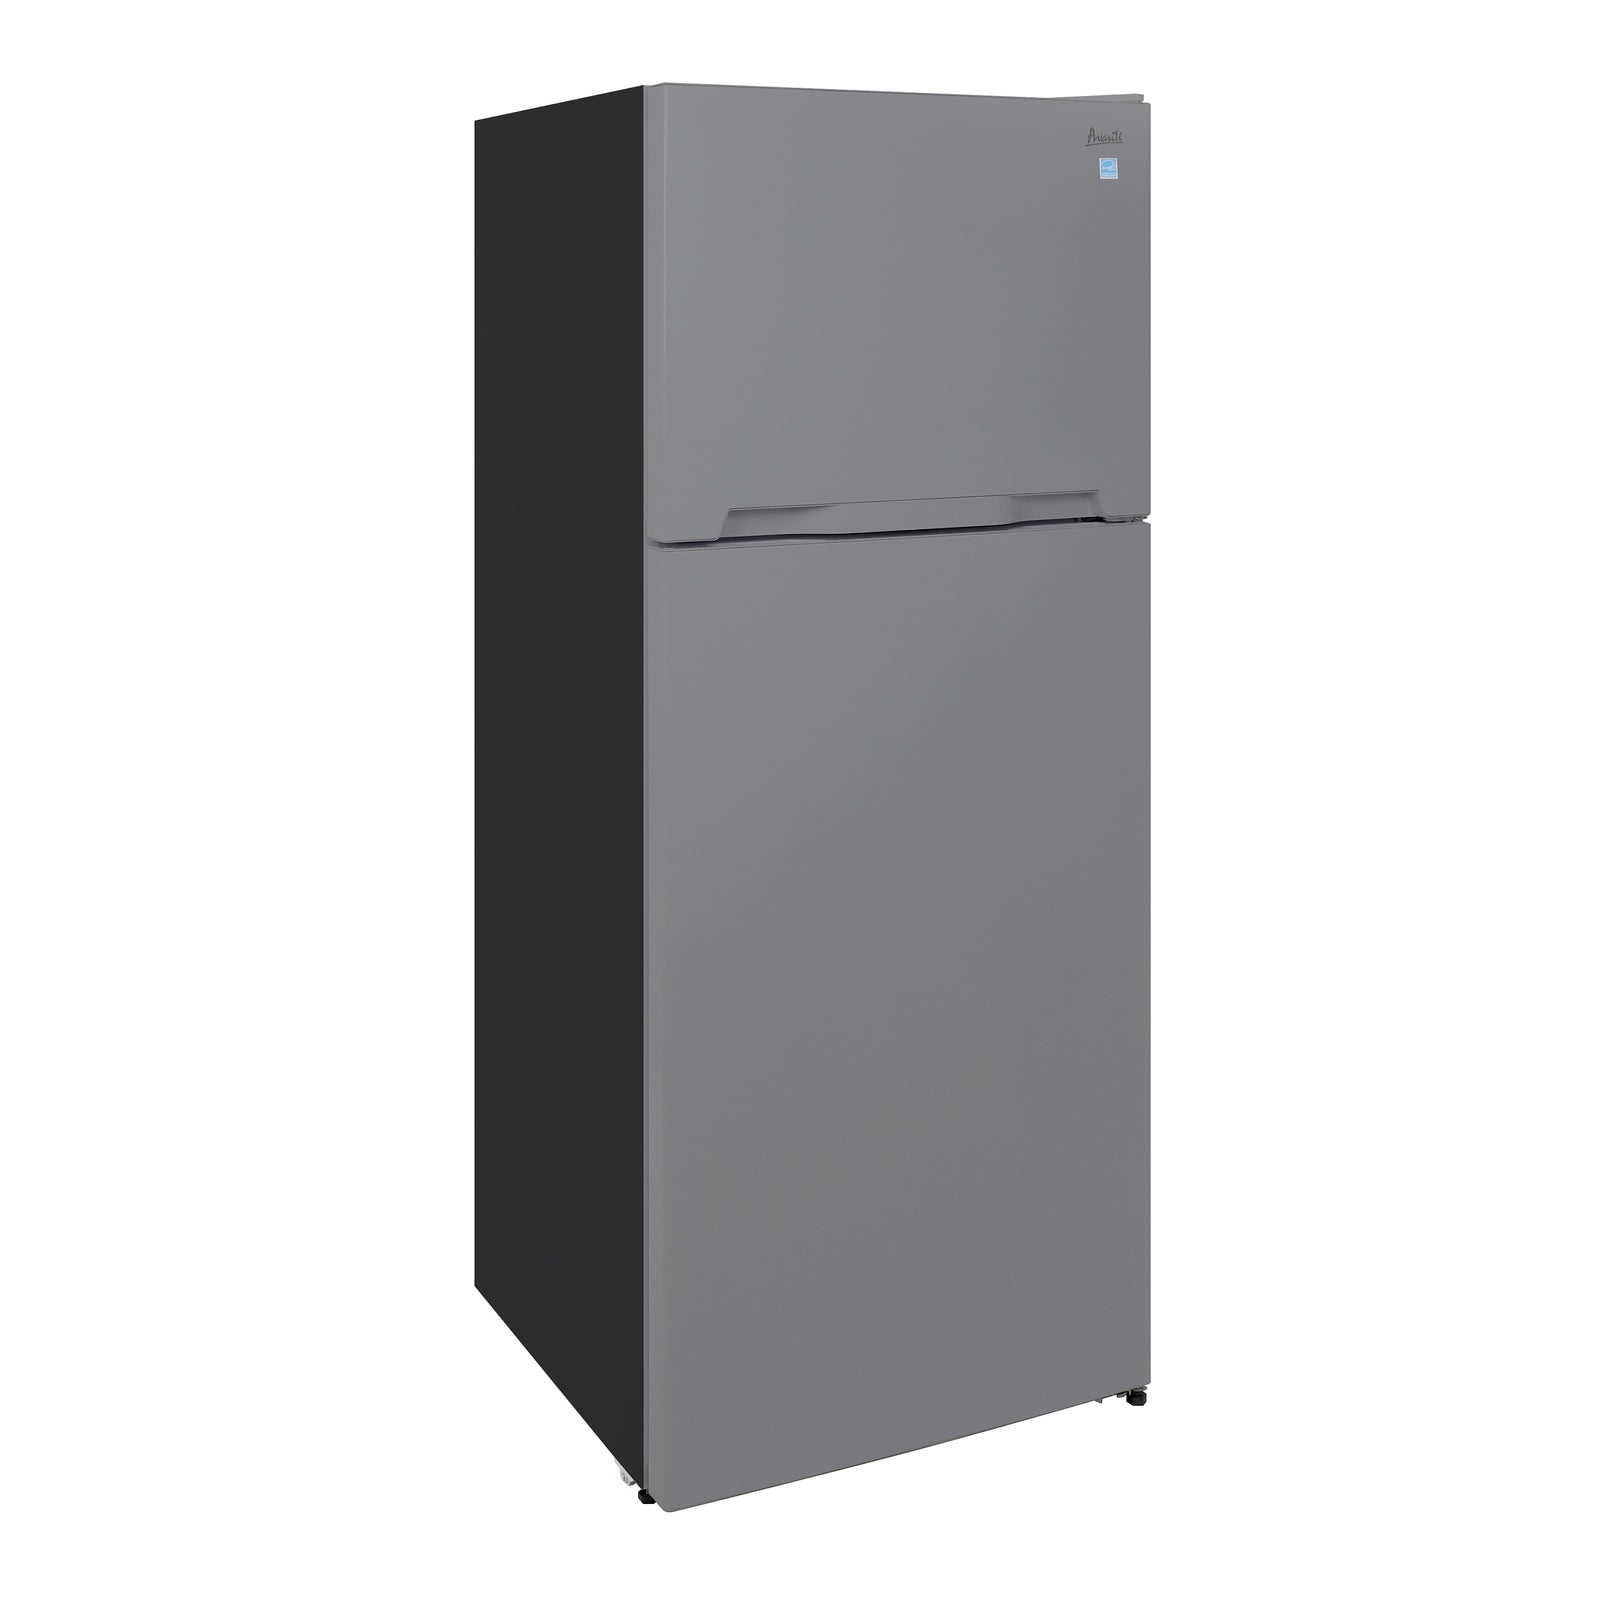 Avanti Frost-Free Top Freezer Refrigerator, 14.3 cu. ft. Capacity